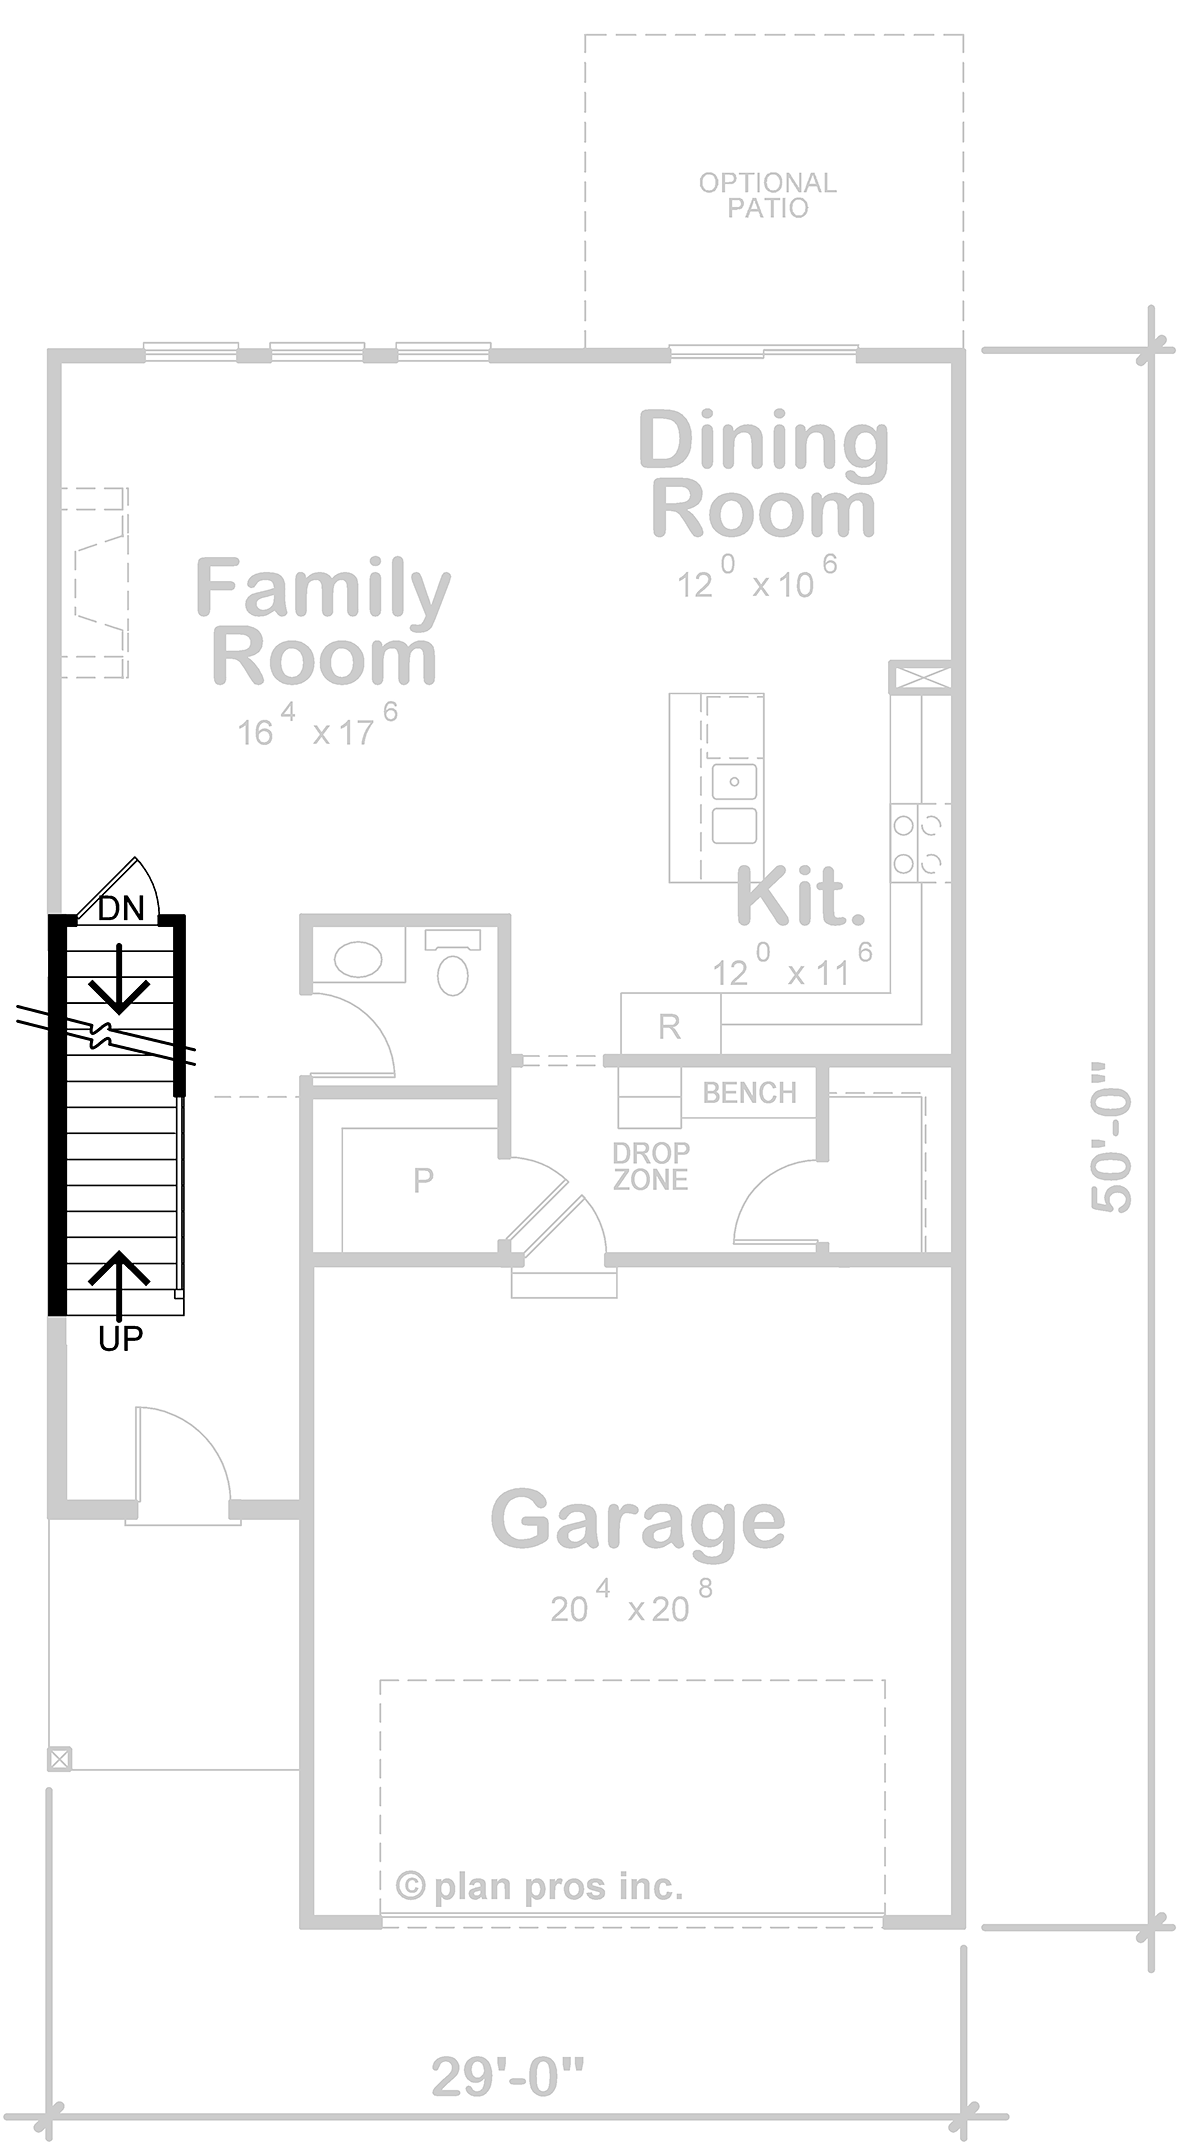 House Plan 75739 Alternate Level One